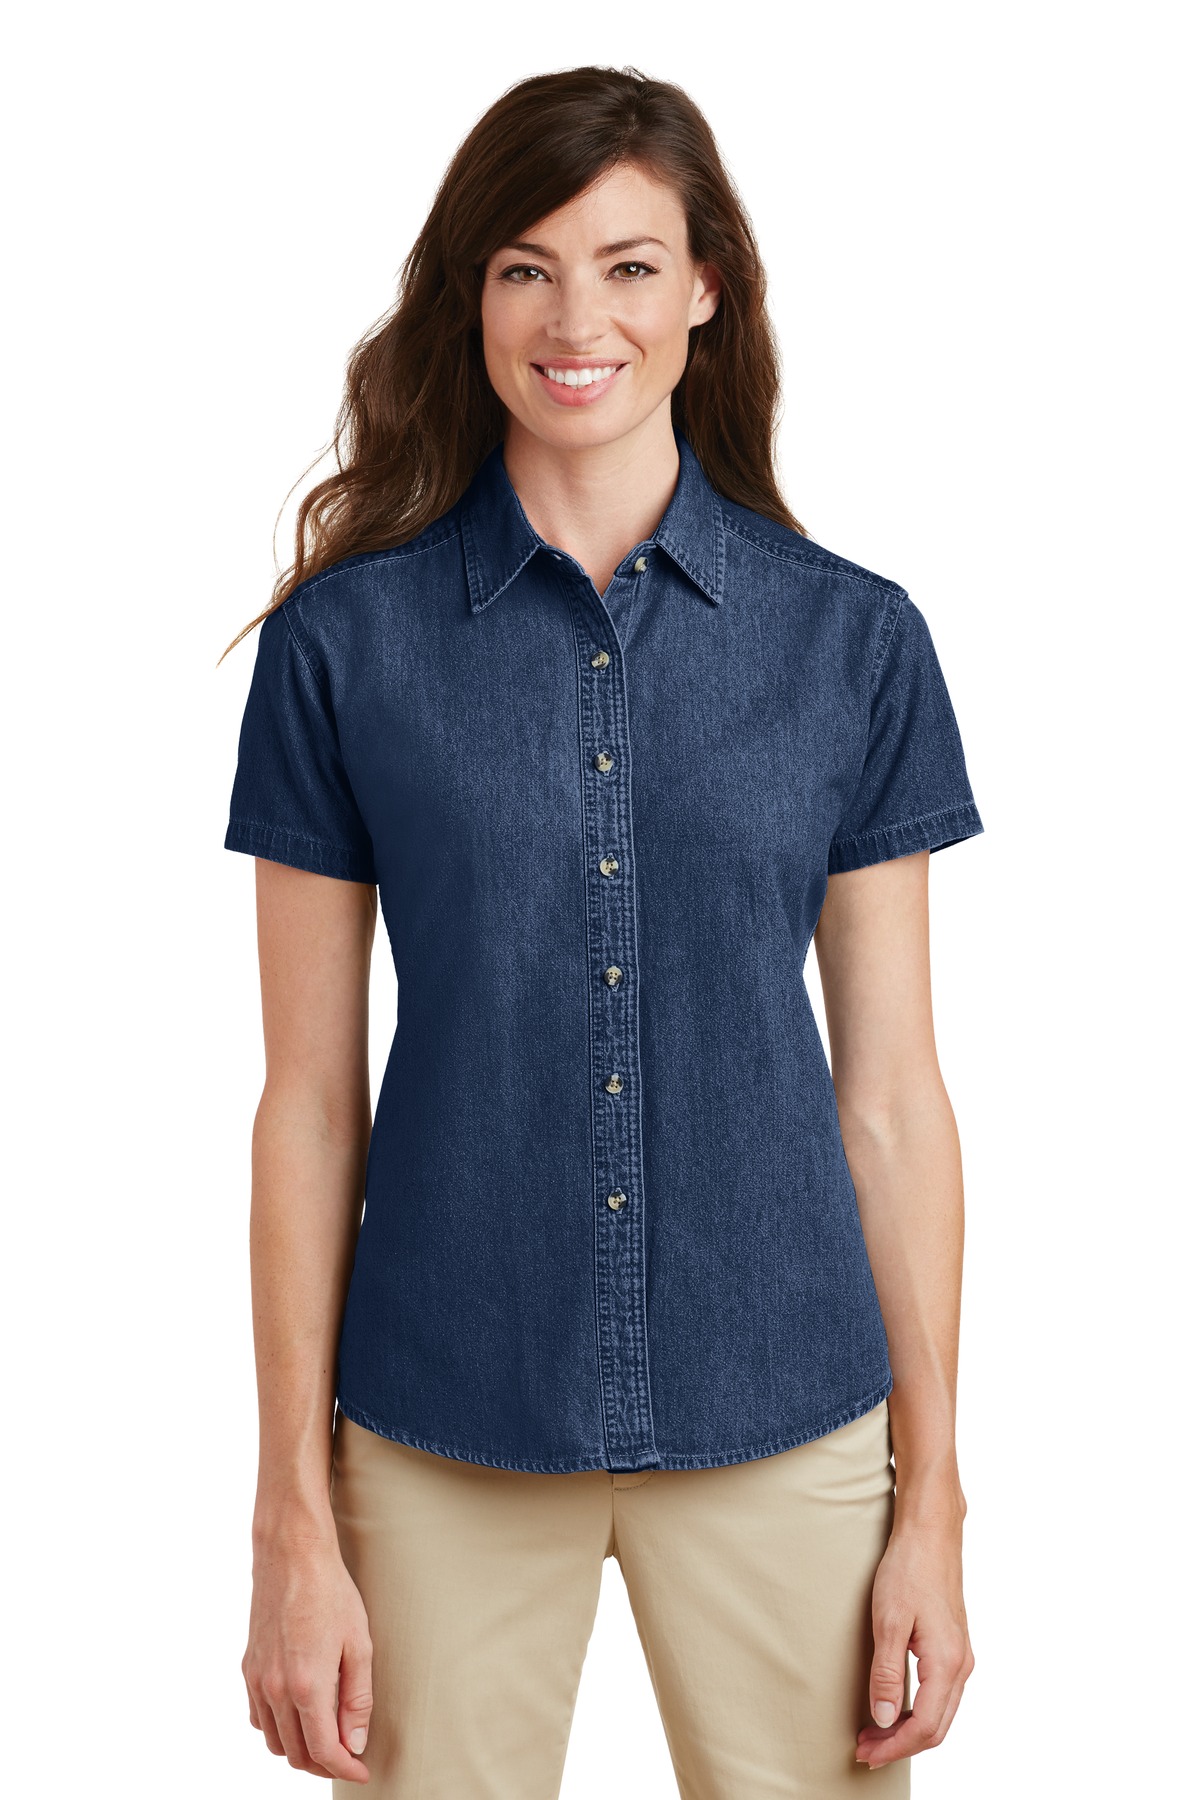 Port & Company Short Sleeve Value Denim Shirt (LSP11) Ink Blue, 4XL - image 1 of 2